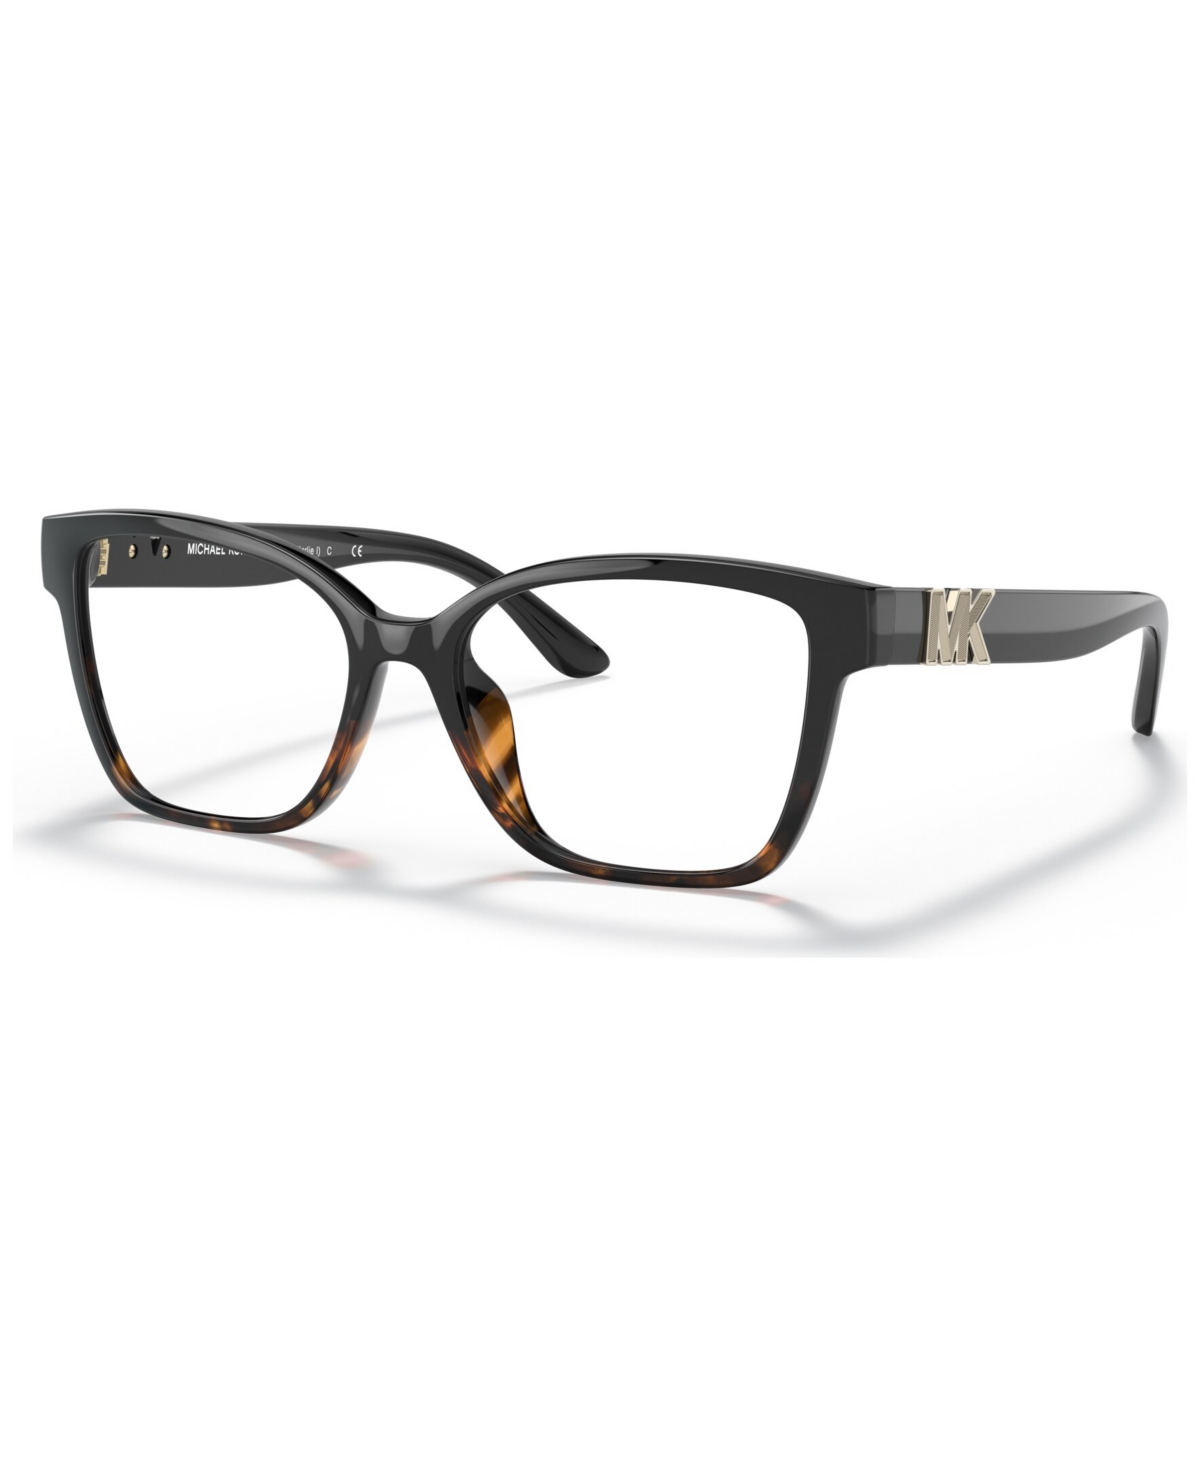 Women's Square Eyeglasses, MK4094U51-o - Black, Dark Tortoise